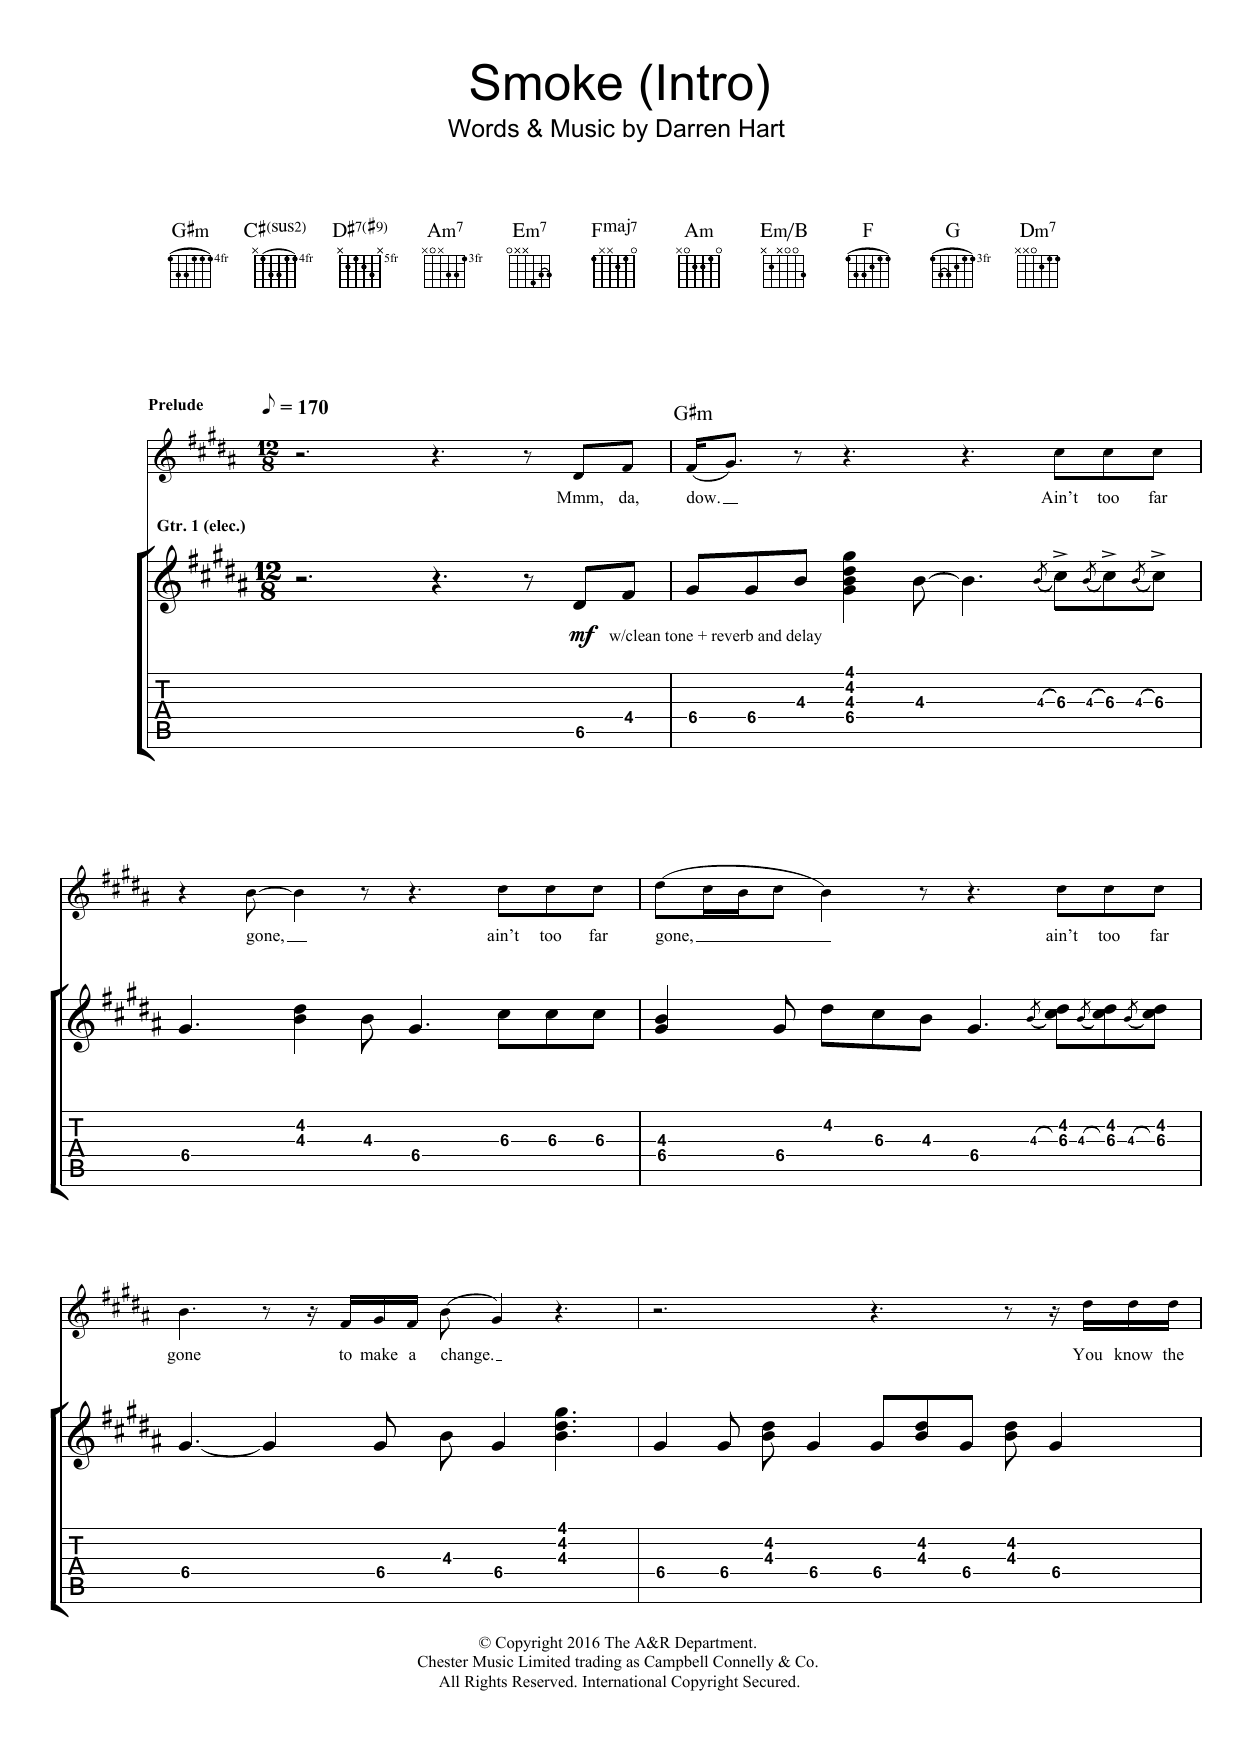 Harts Smoke (Intro) Sheet Music Notes & Chords for Guitar Tab - Download or Print PDF